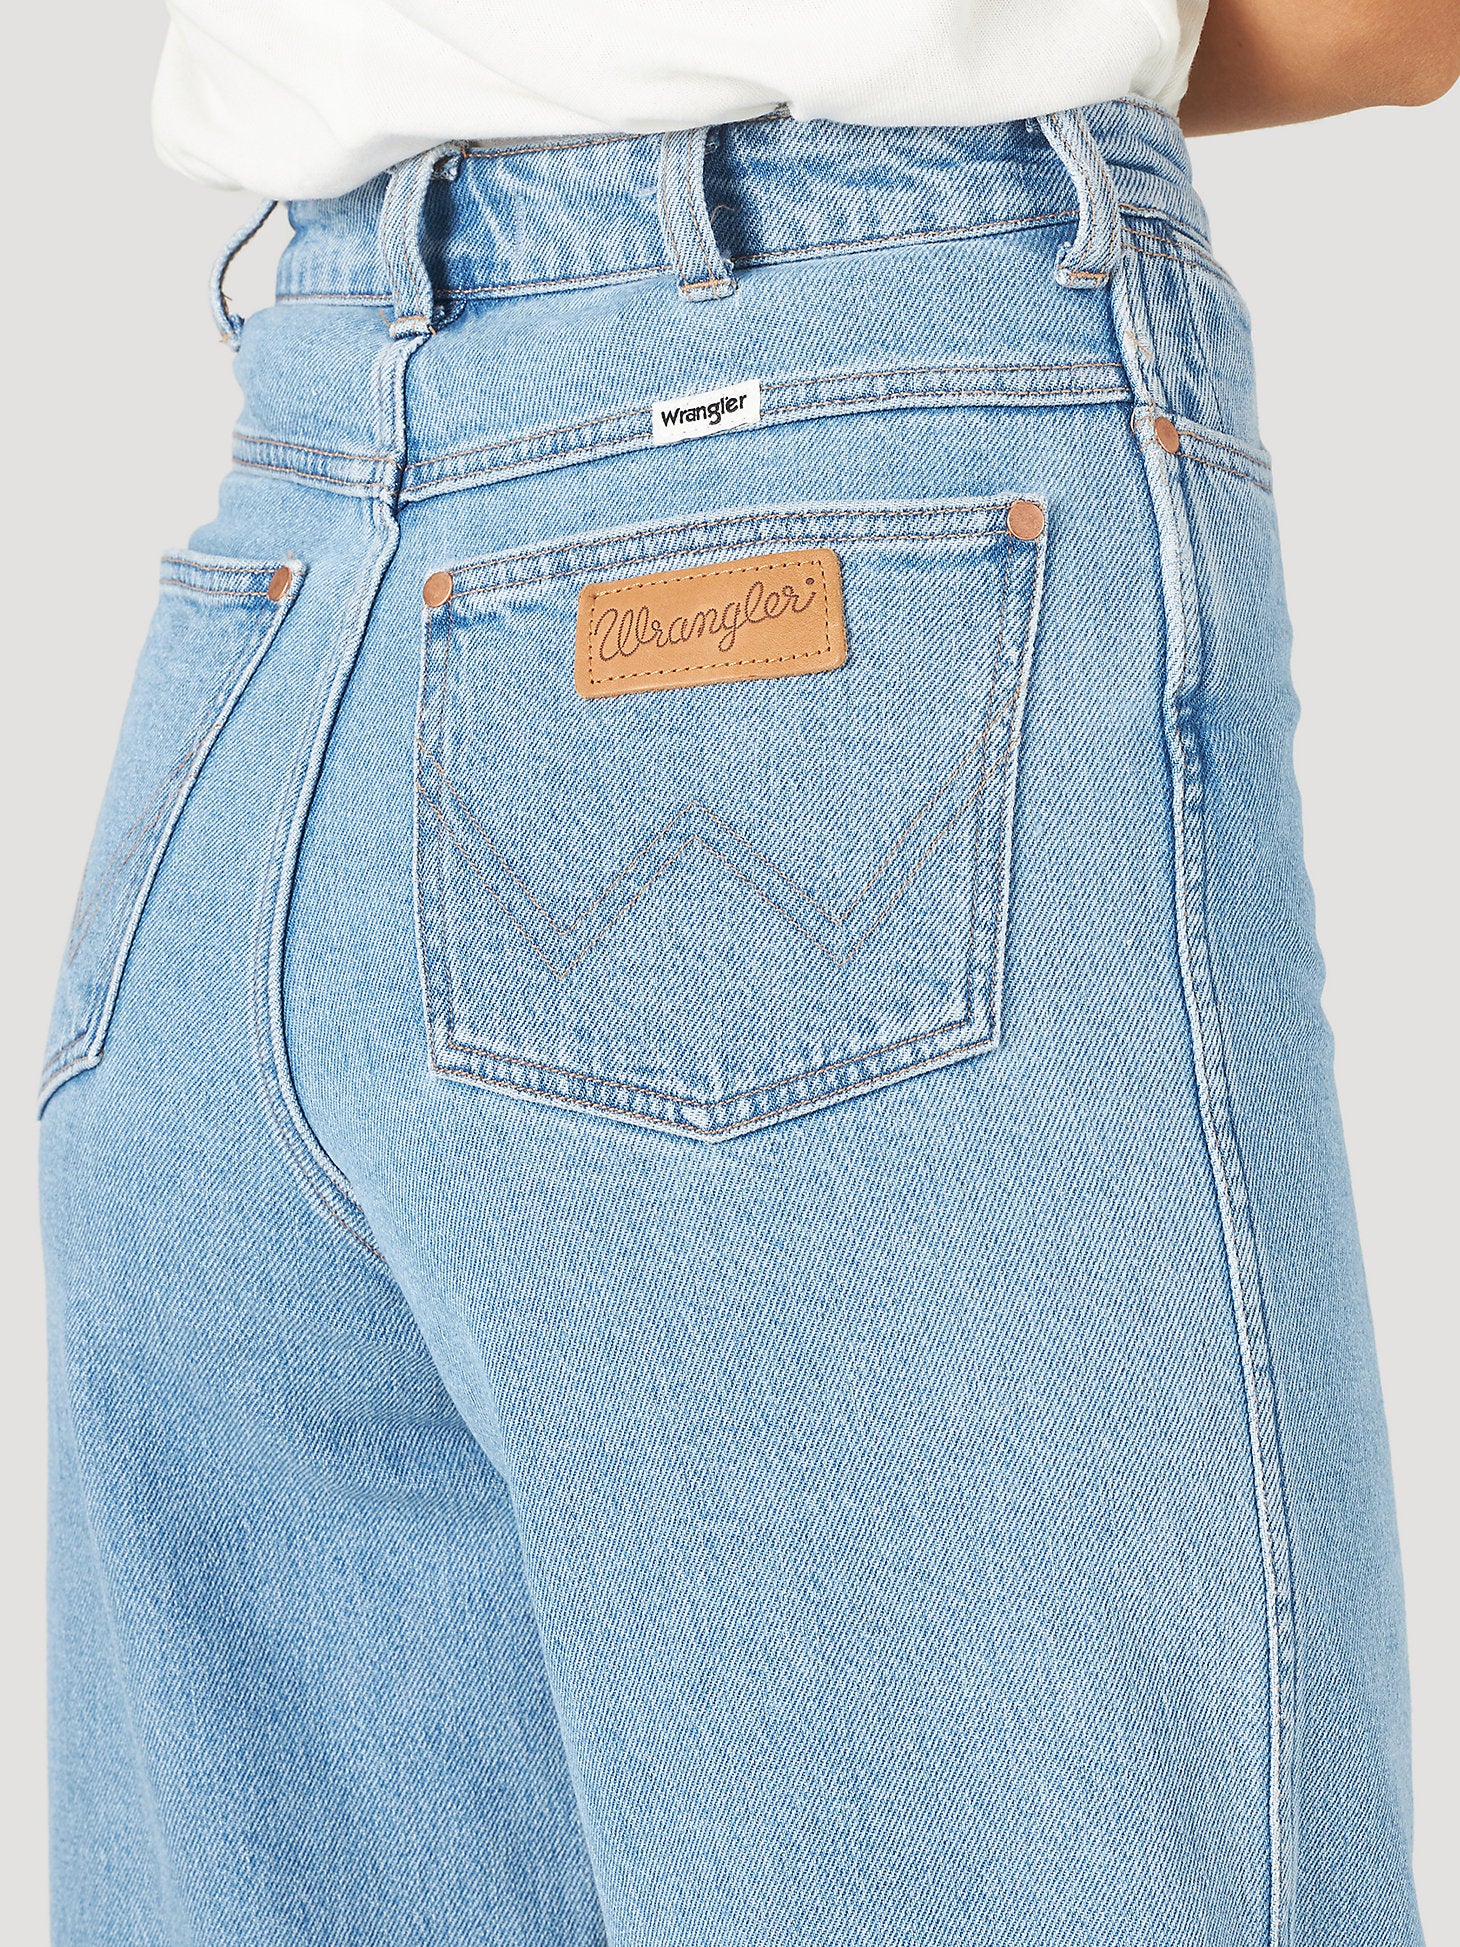 Wrangler Bluestone Barrel Jeans